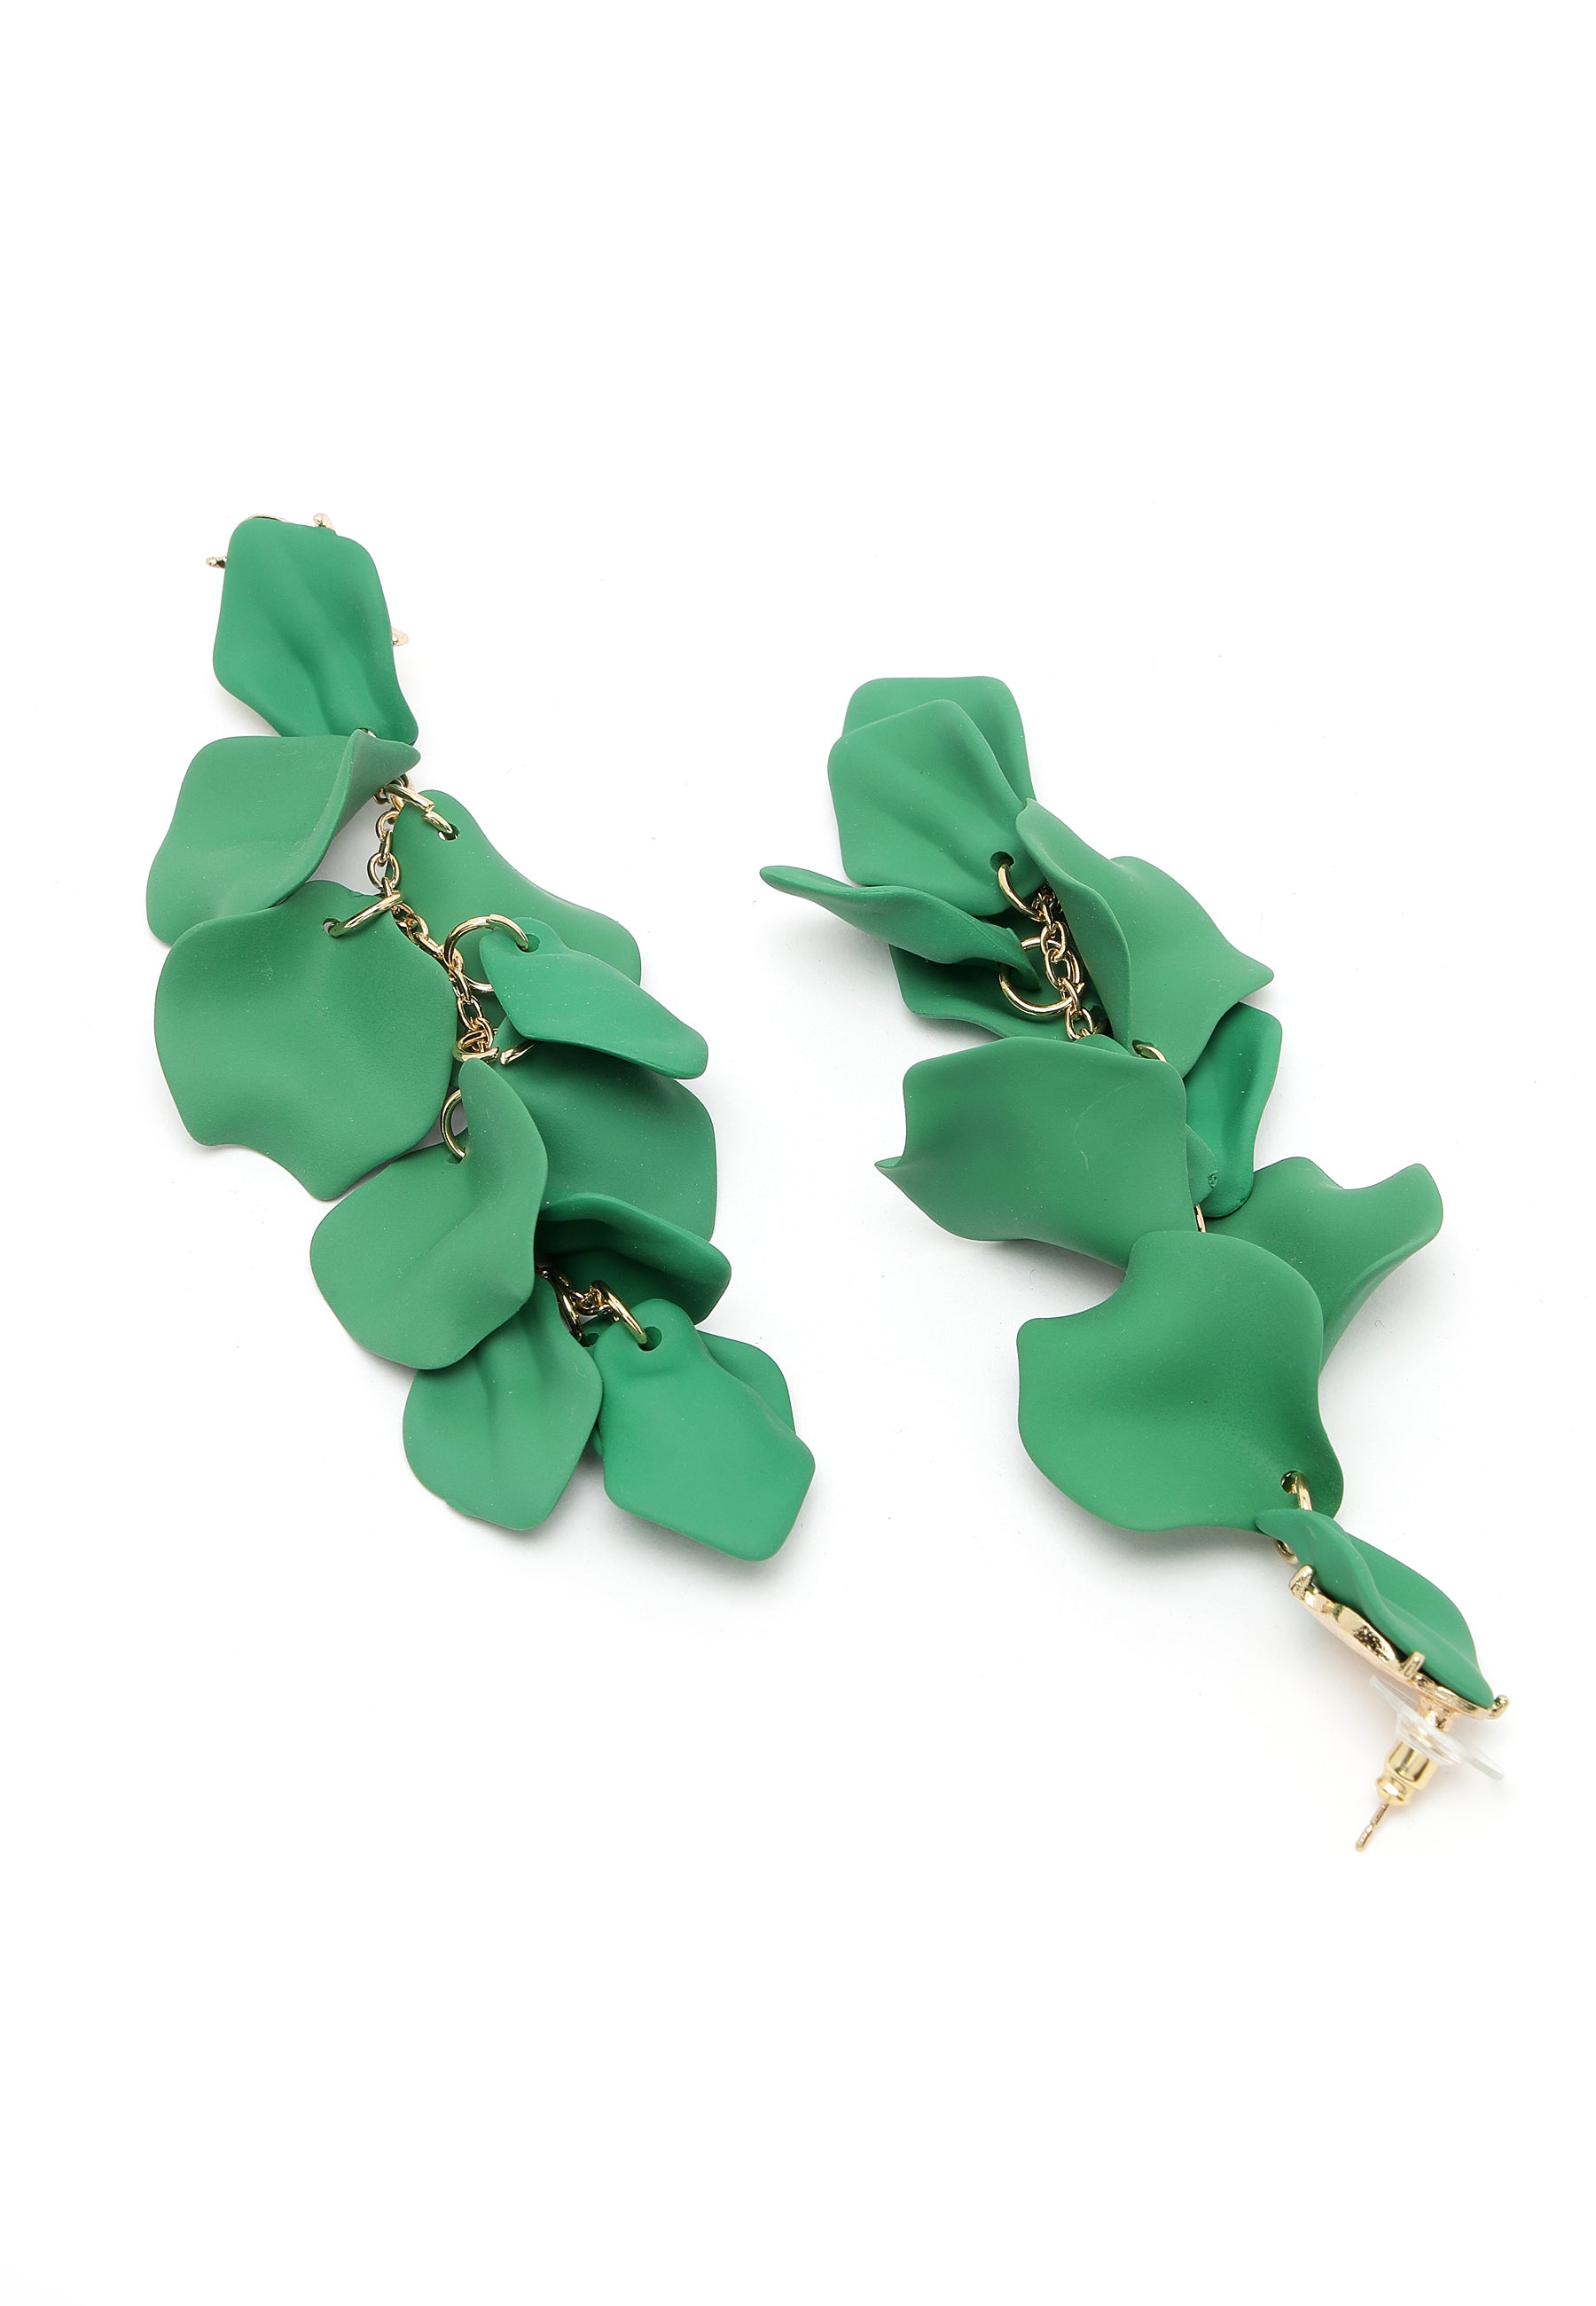 Dark Green Rose Petal Shaped Danglers Earrings.